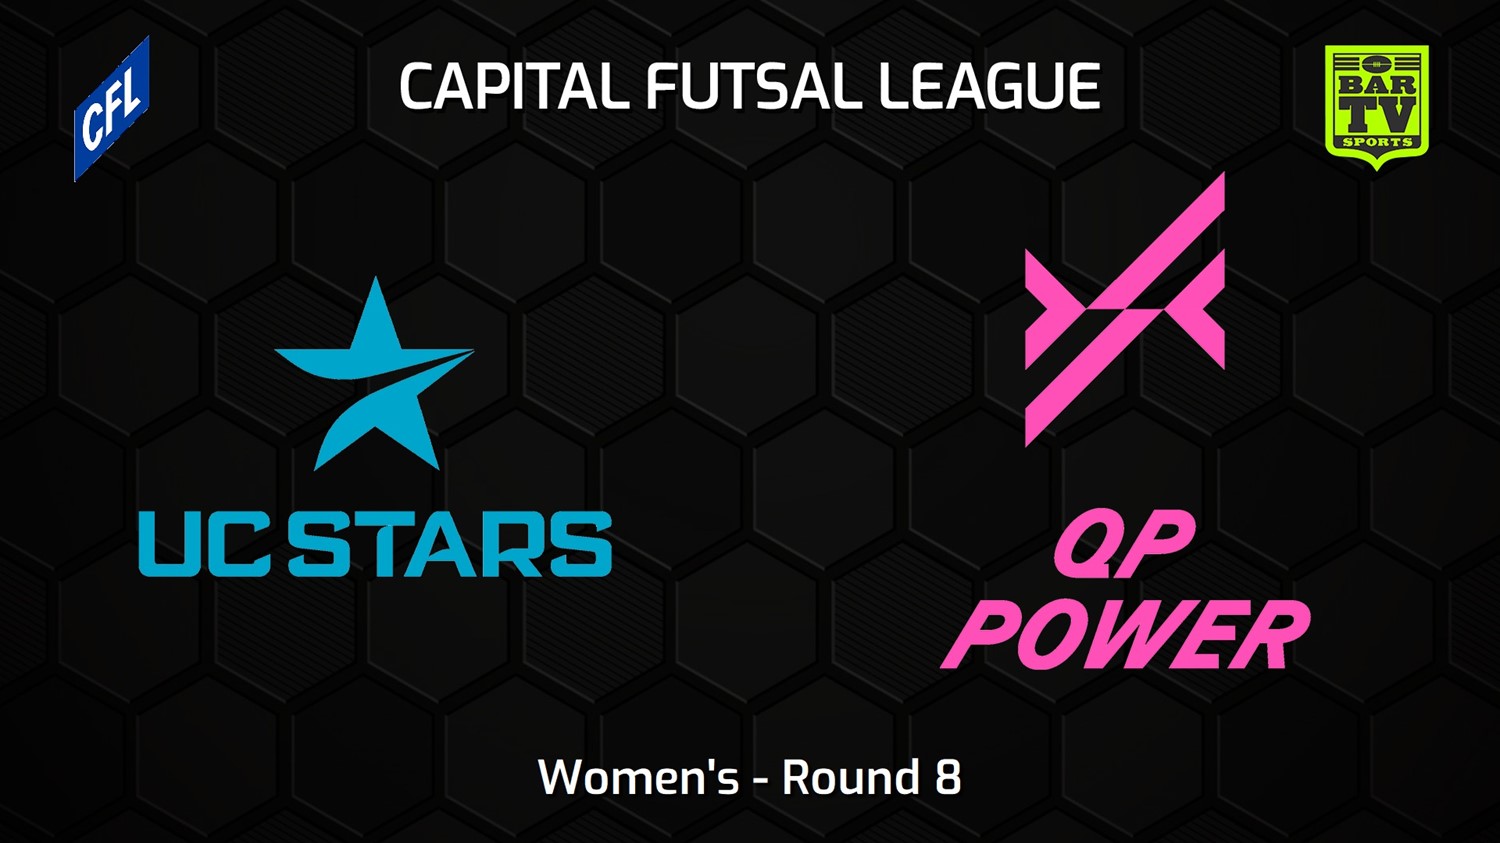 221218-Capital Football Futsal Round 8 - Women's - UC Stars FC v Queanbeyan-Palerang Power Minigame Slate Image